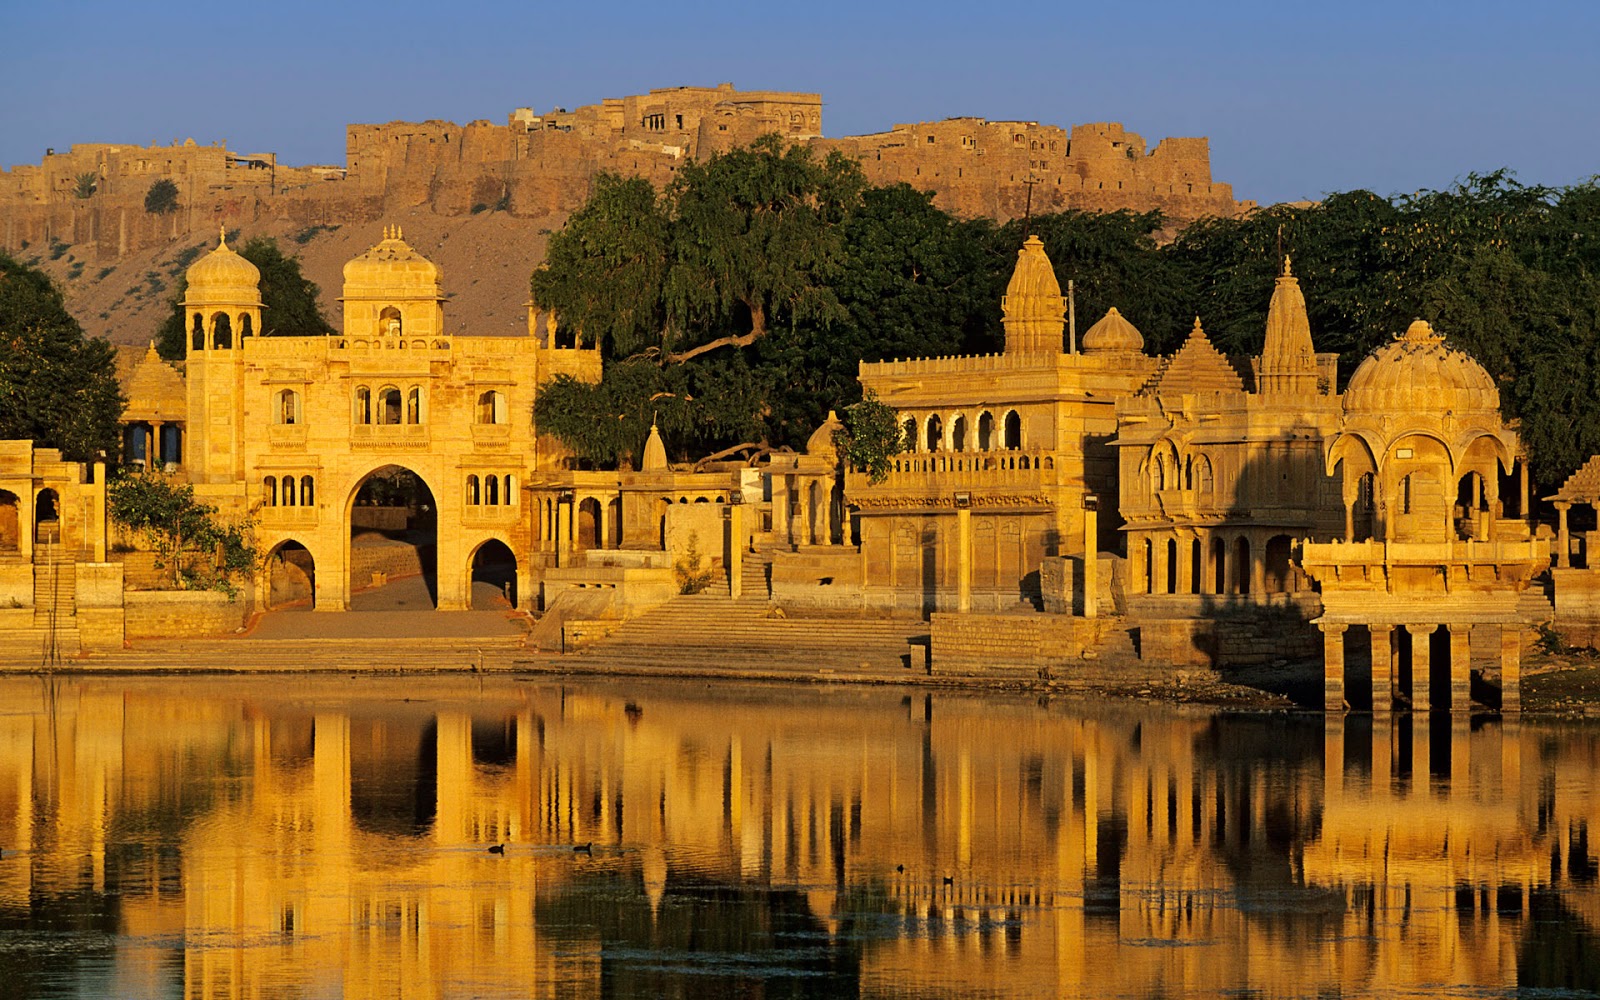 Amazing Jaisalmer Pictures & Backgrounds